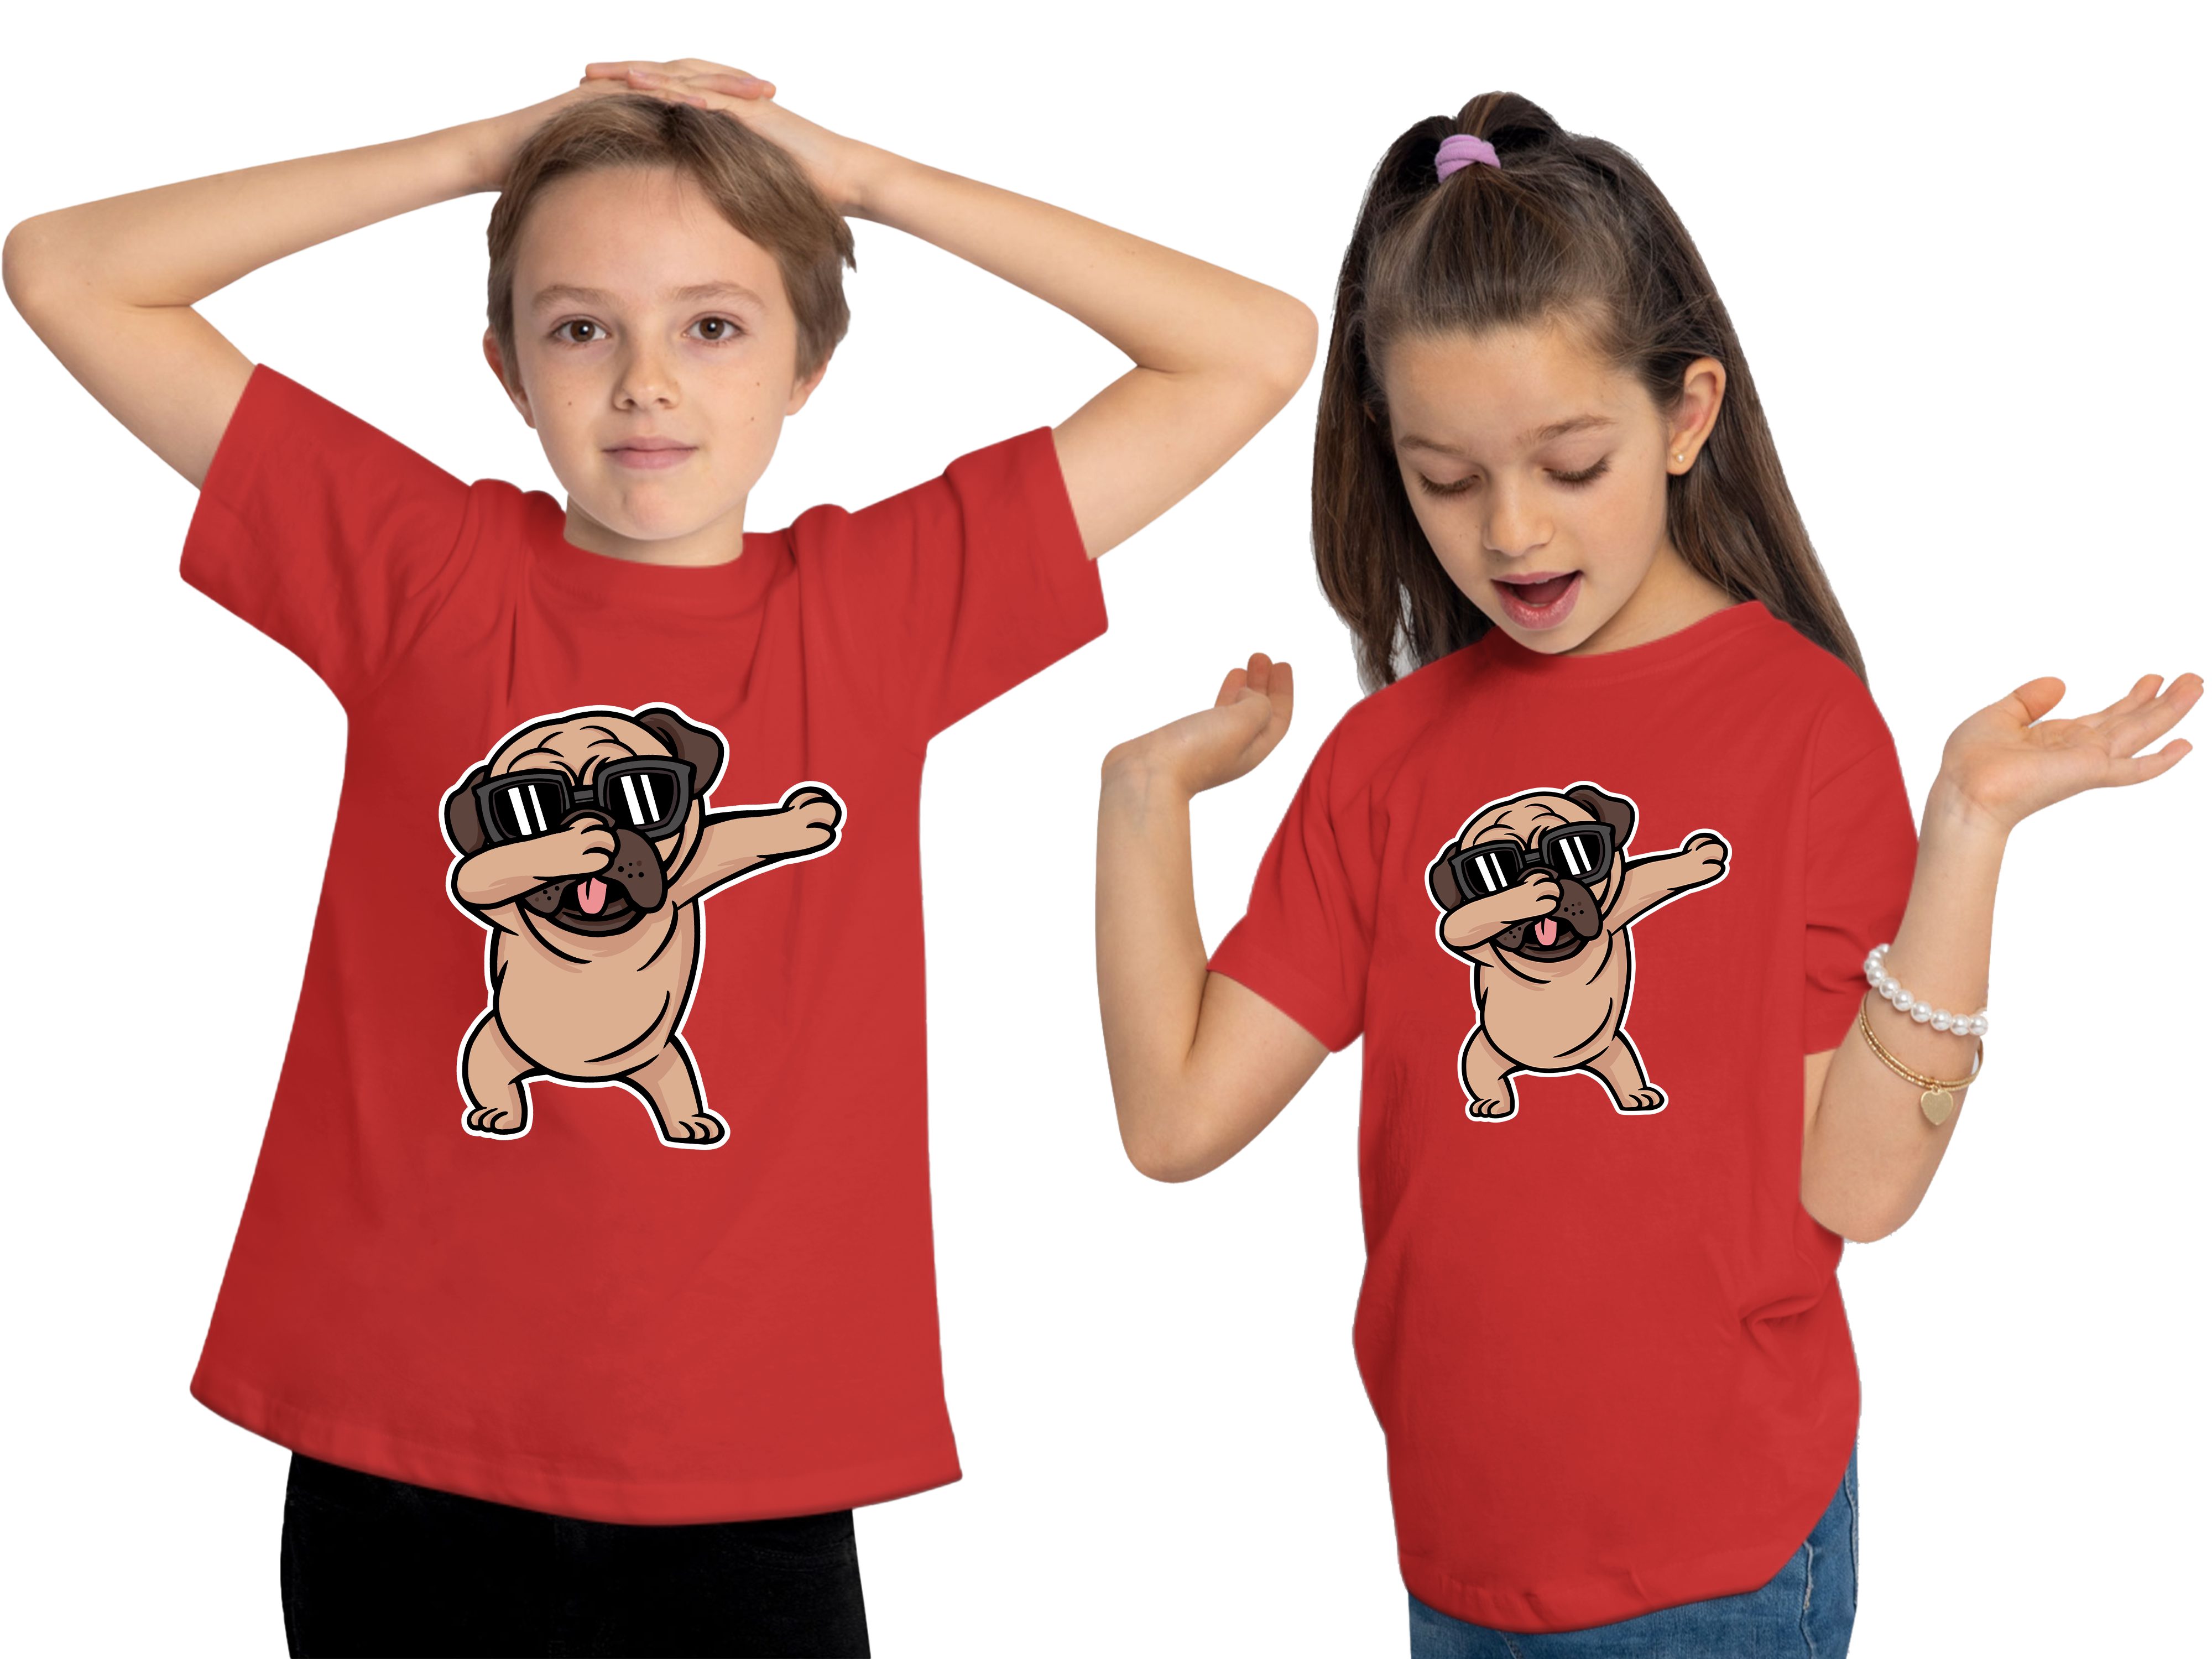 Kinder - Hunde tanzender MyDesign24 Print-Shirt Hund rot Baumwollshirt mit i238 dab Aufdruck, bedruckt T-Shirt